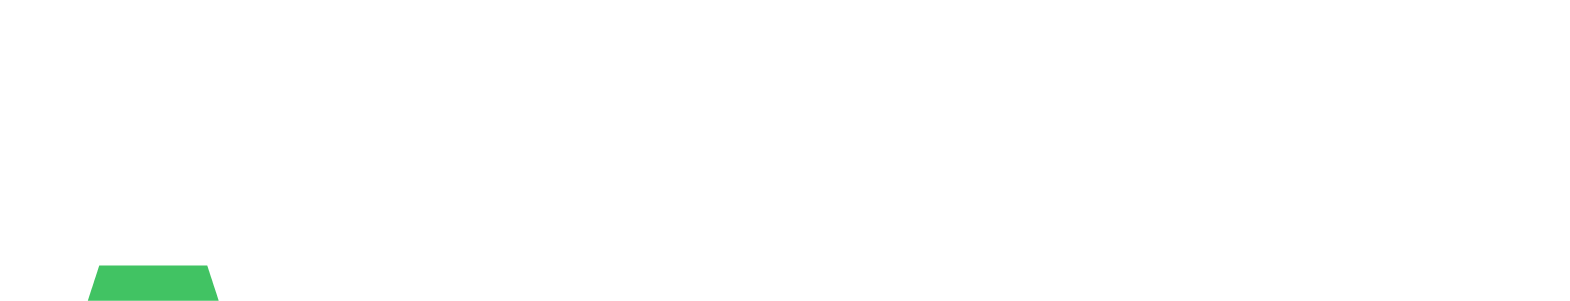 Avnet logo grand pour les fonds sombres (PNG transparent)